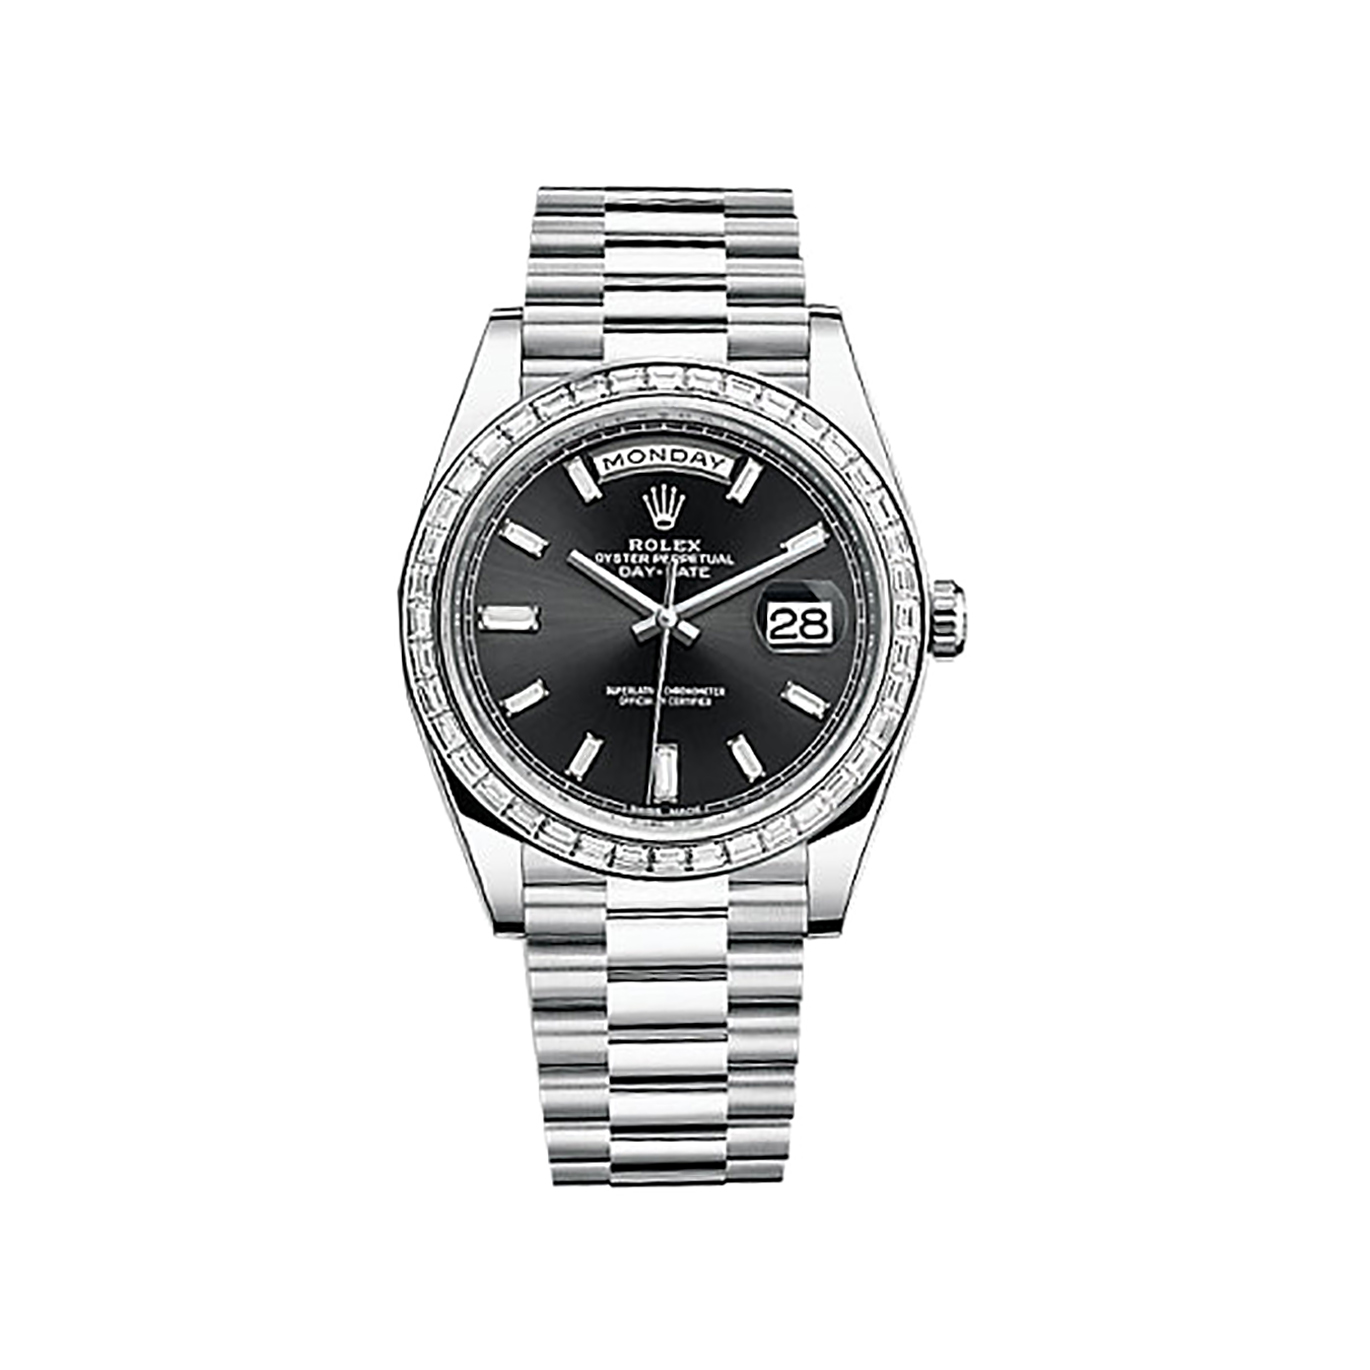 Day-Date 40 228396TBR Platinum & Diamonds Watch (Black Set with Diamonds)